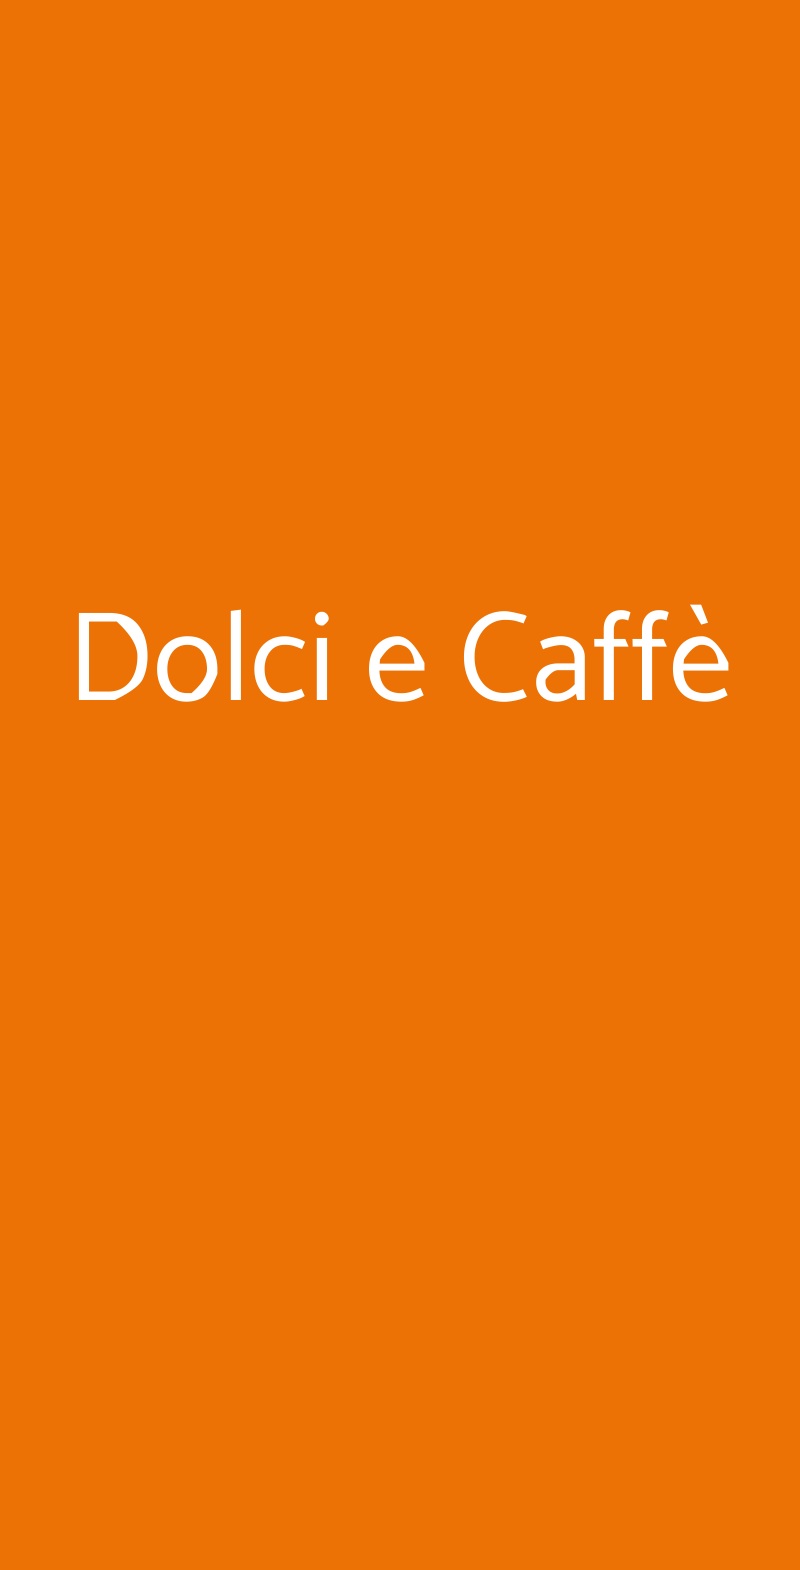 Dolci e Caffè Milano menù 1 pagina